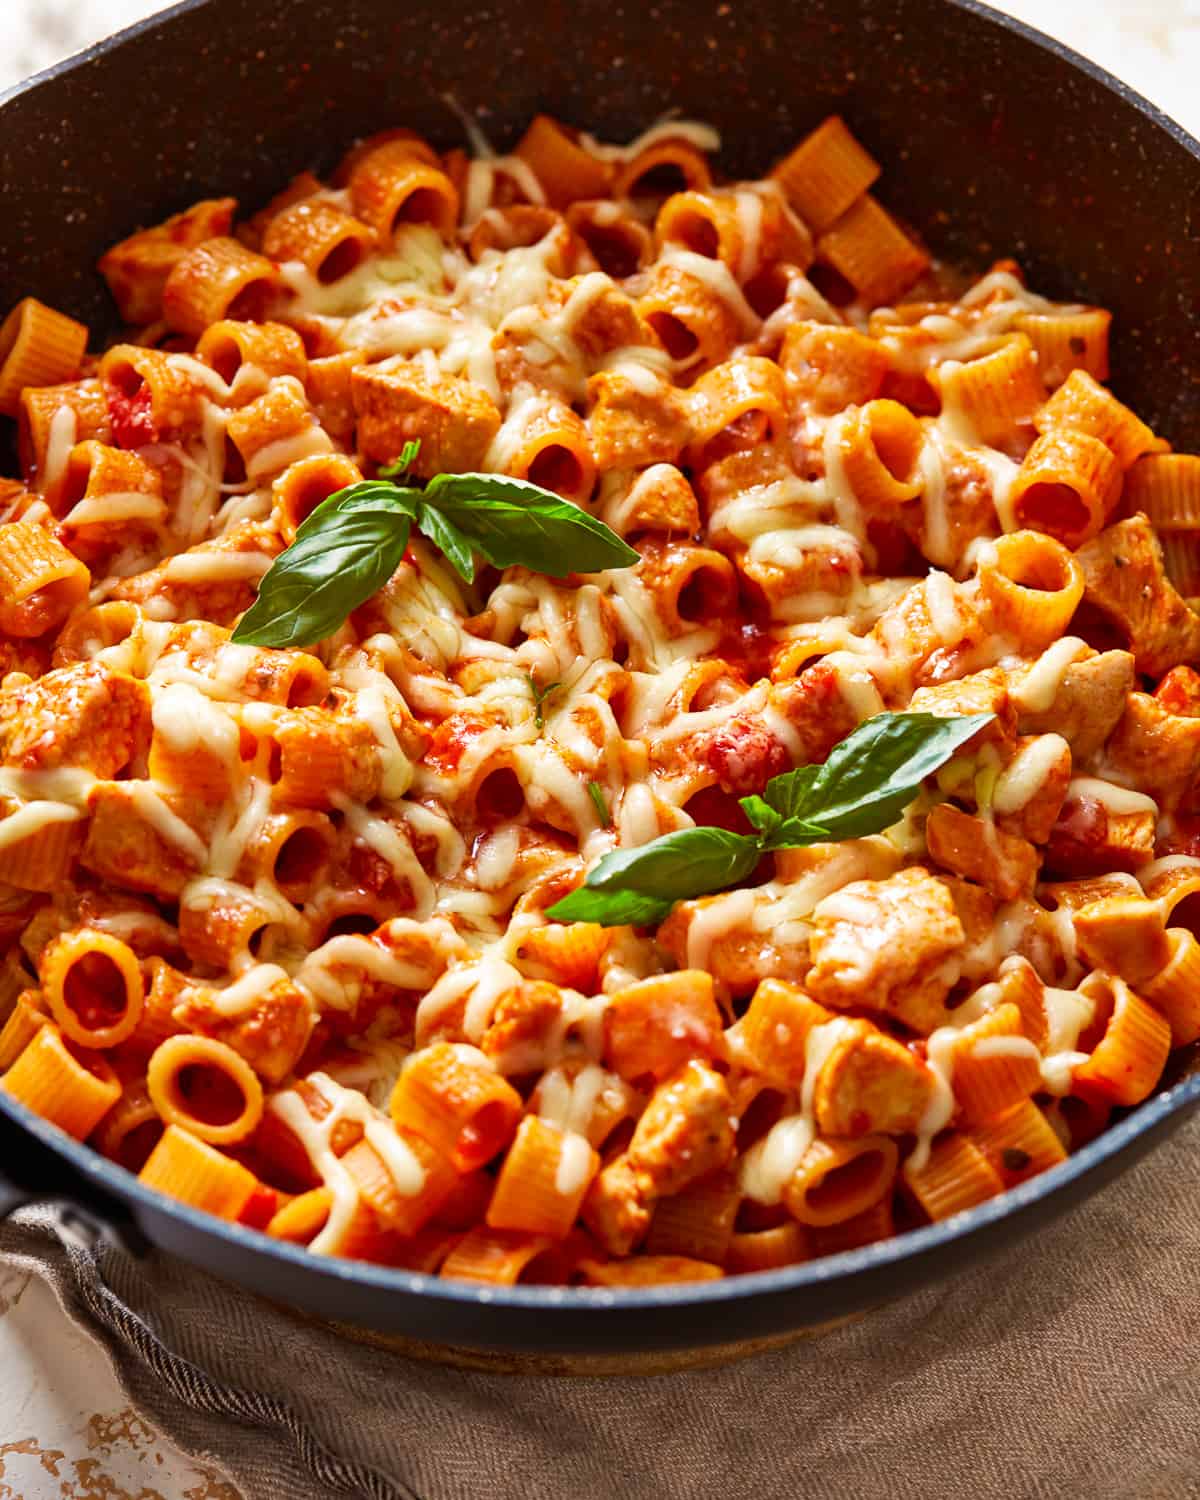 Prego Pasta Sauce, Italian Tomato Sauce with Roasted Garlic & Parmesan  Cheese, 24 Ounce Jar